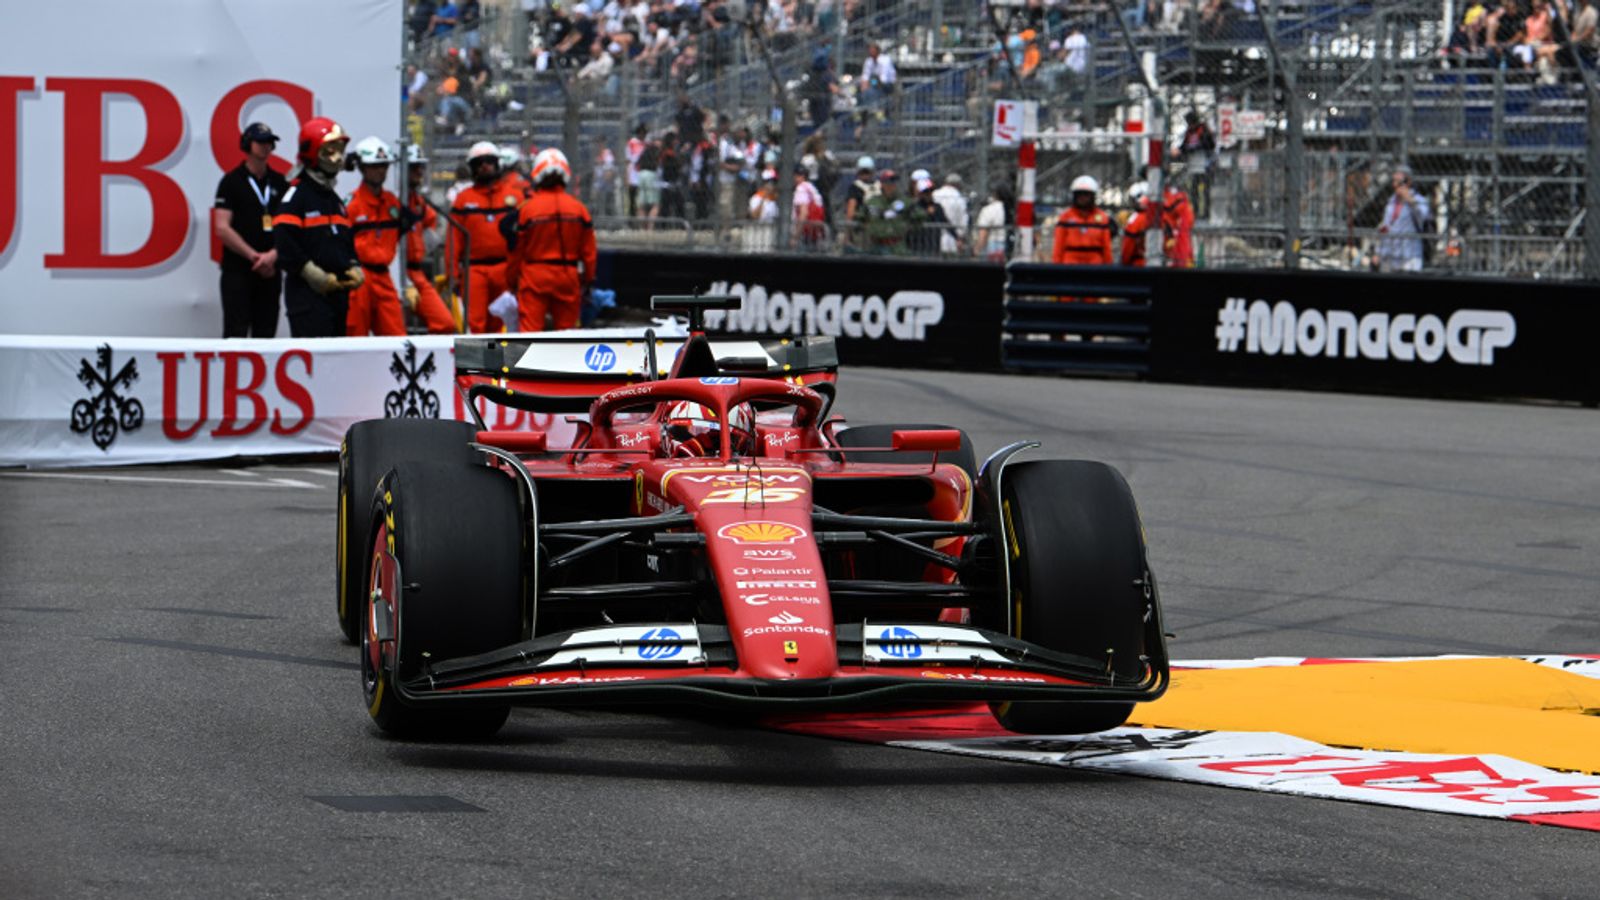 Monaco GP: Charles Leclerc tops Practice Two from Lewis Hamilton as Ferrari unleash impressive pace | F1 News